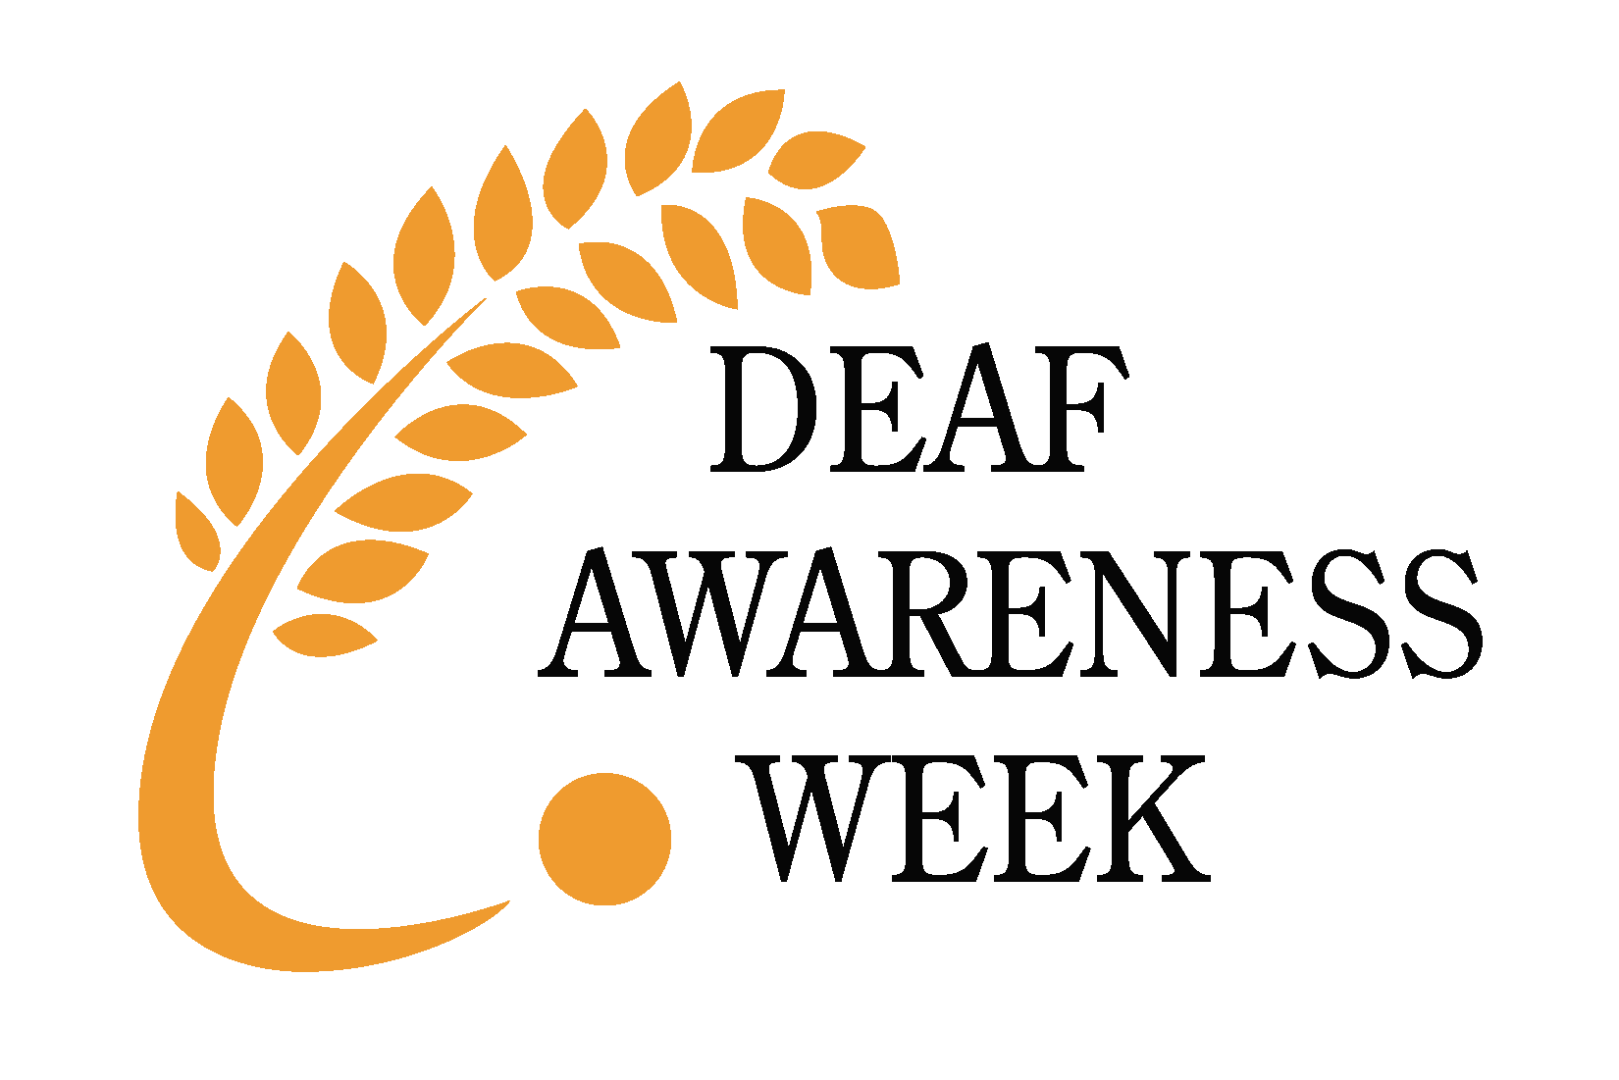 Logo for the 2021 Deaf Awareness Week